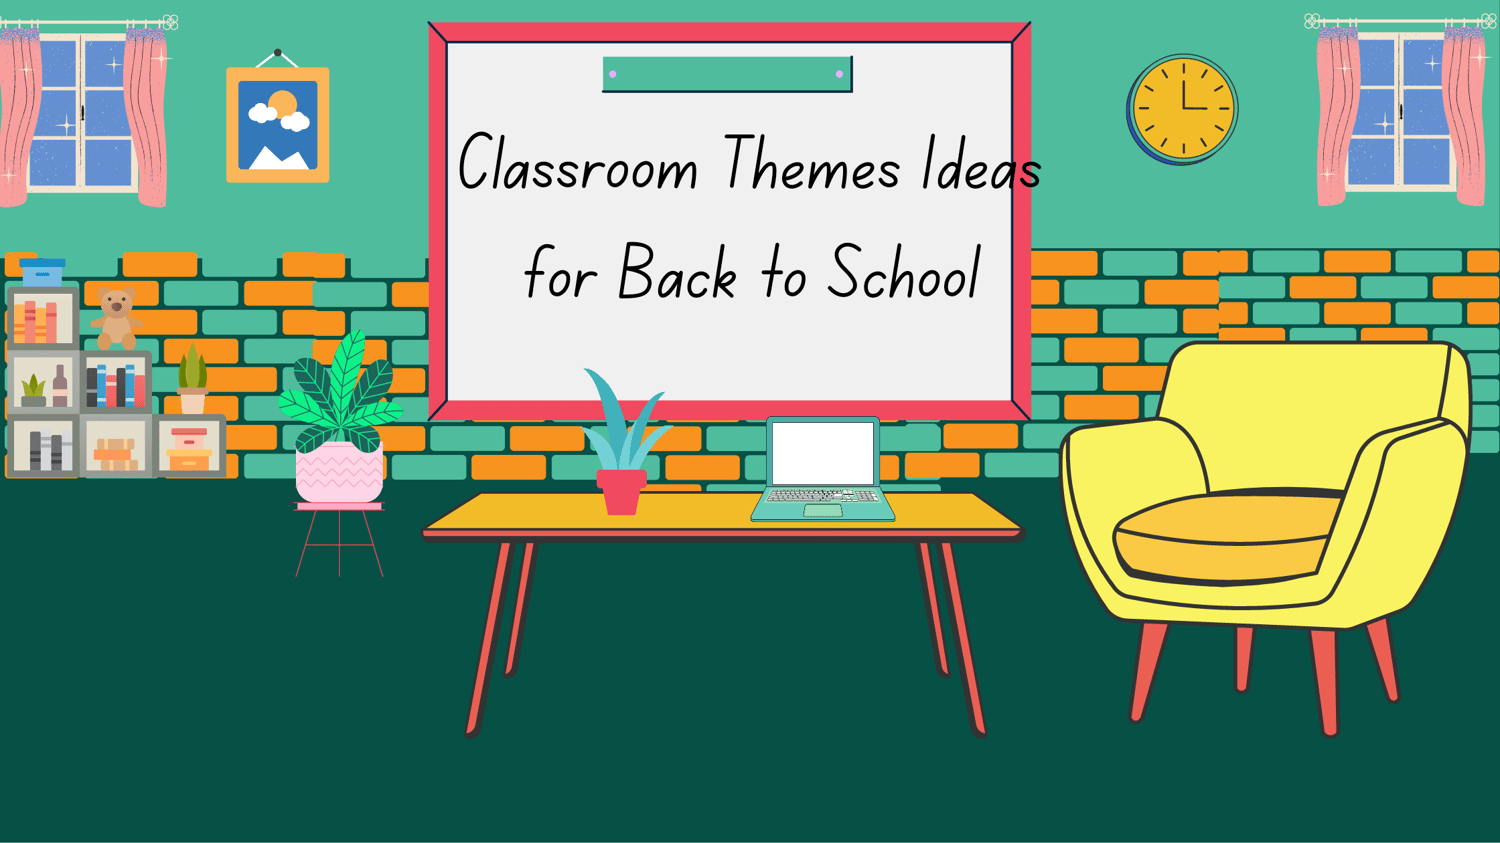 Back to School- Classroom themes ideas for teachers